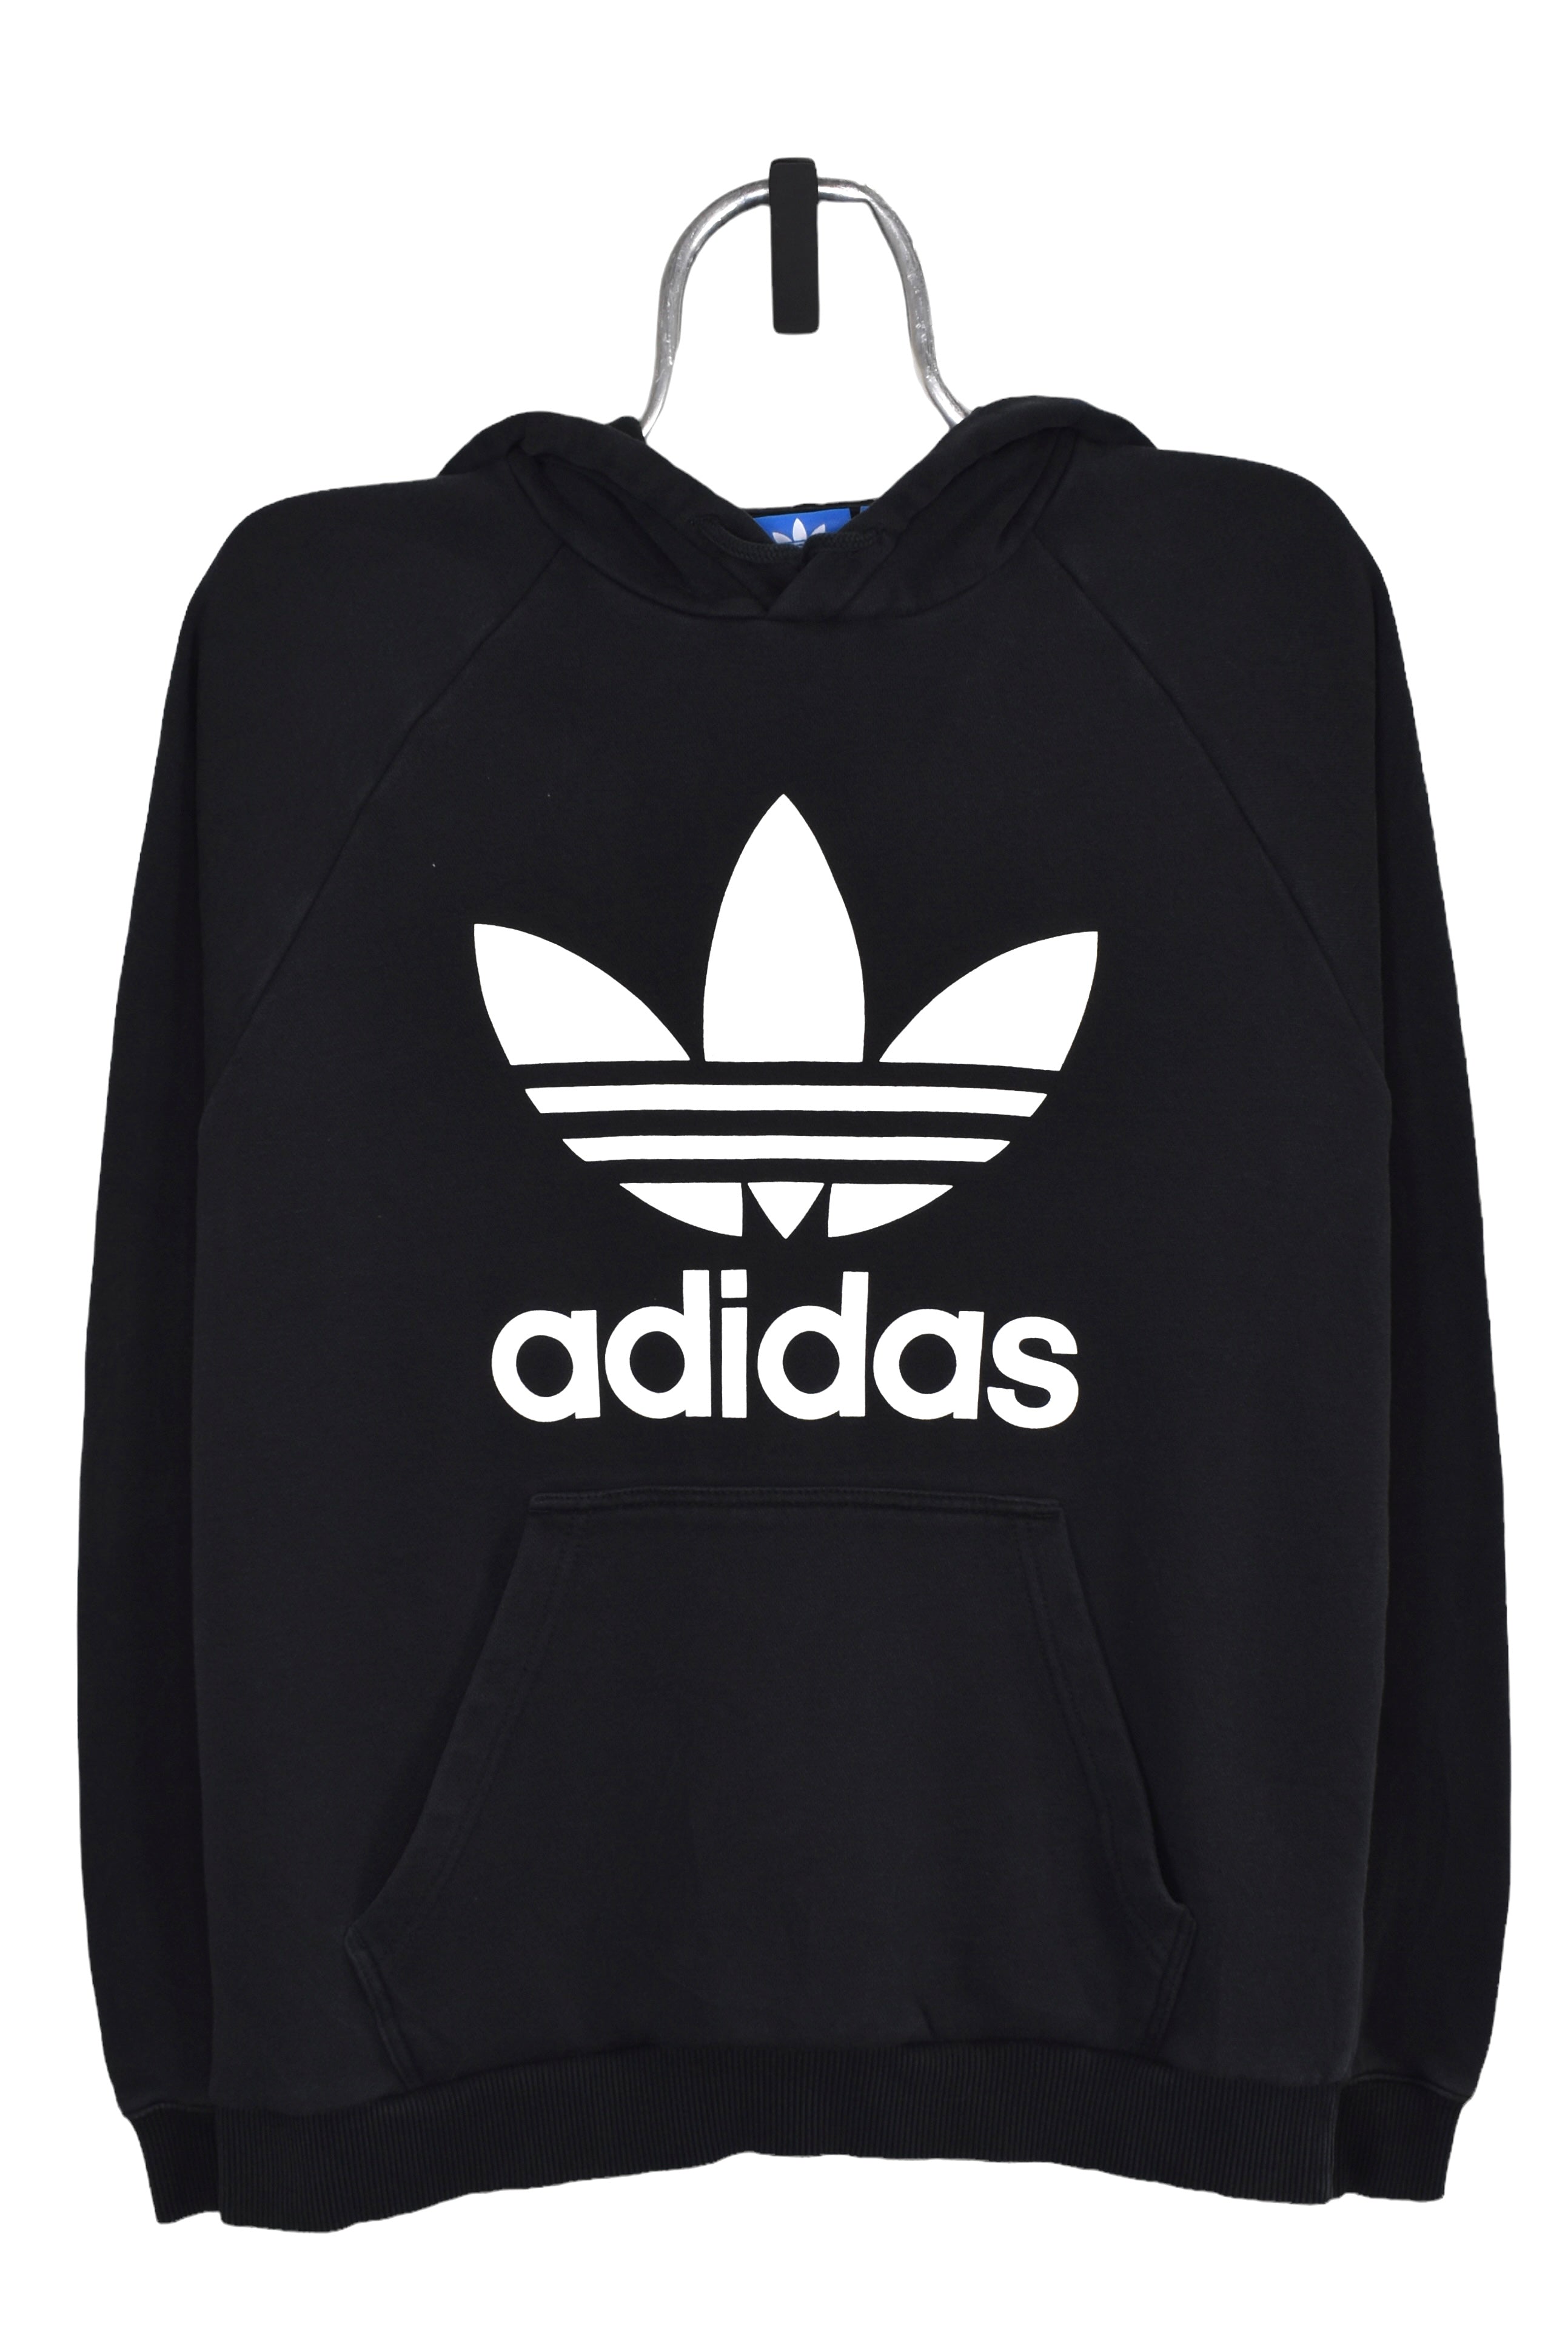 Modern Adidas hoodie (M), black graphic sweatshirt